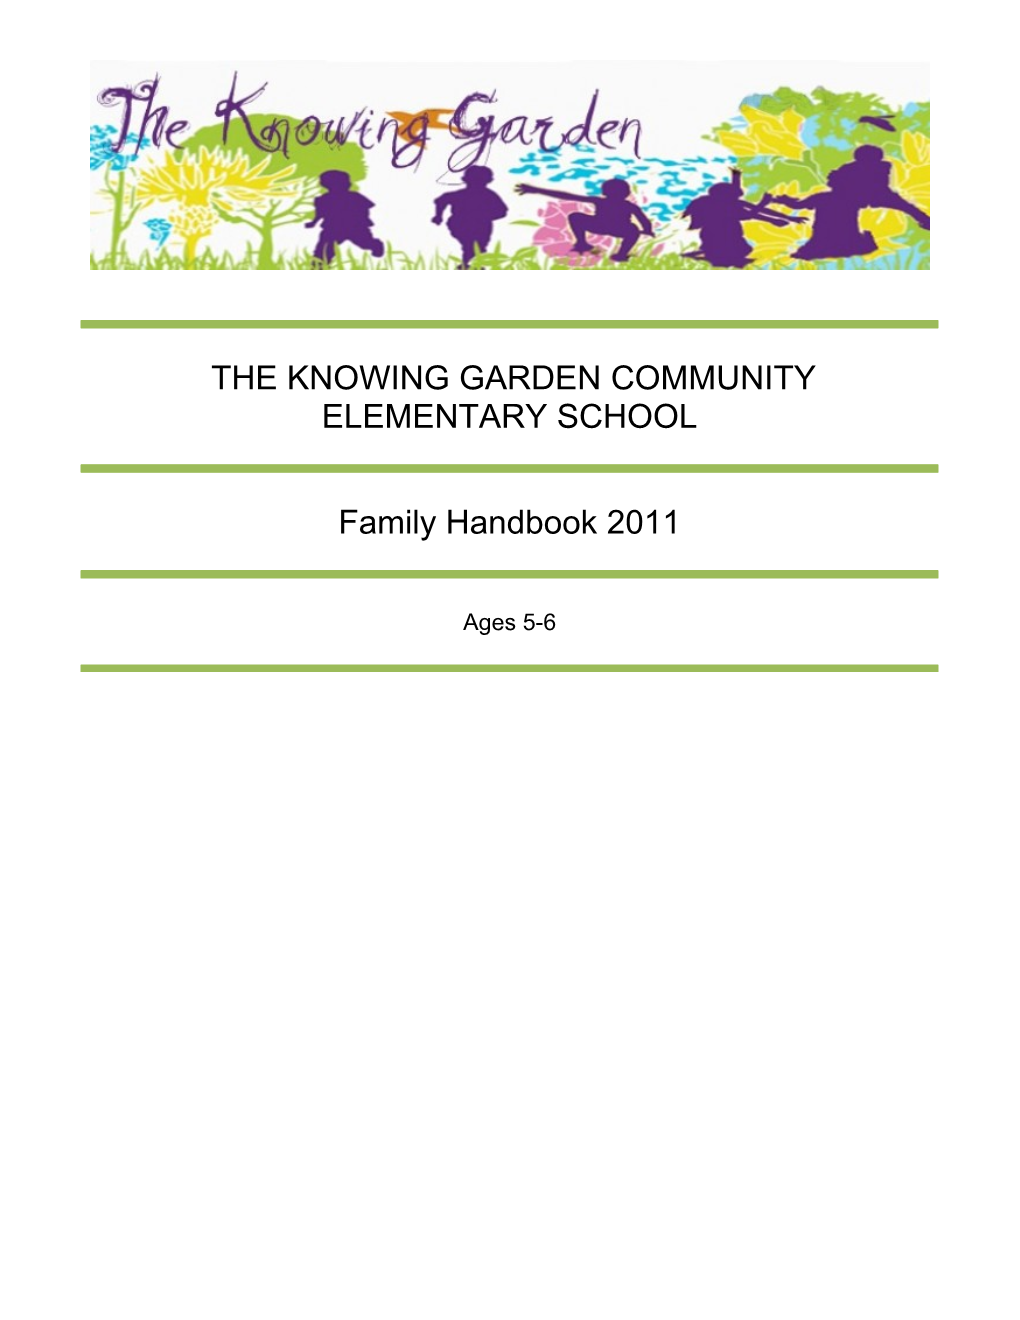 The Knowing Garden Community Elementary School